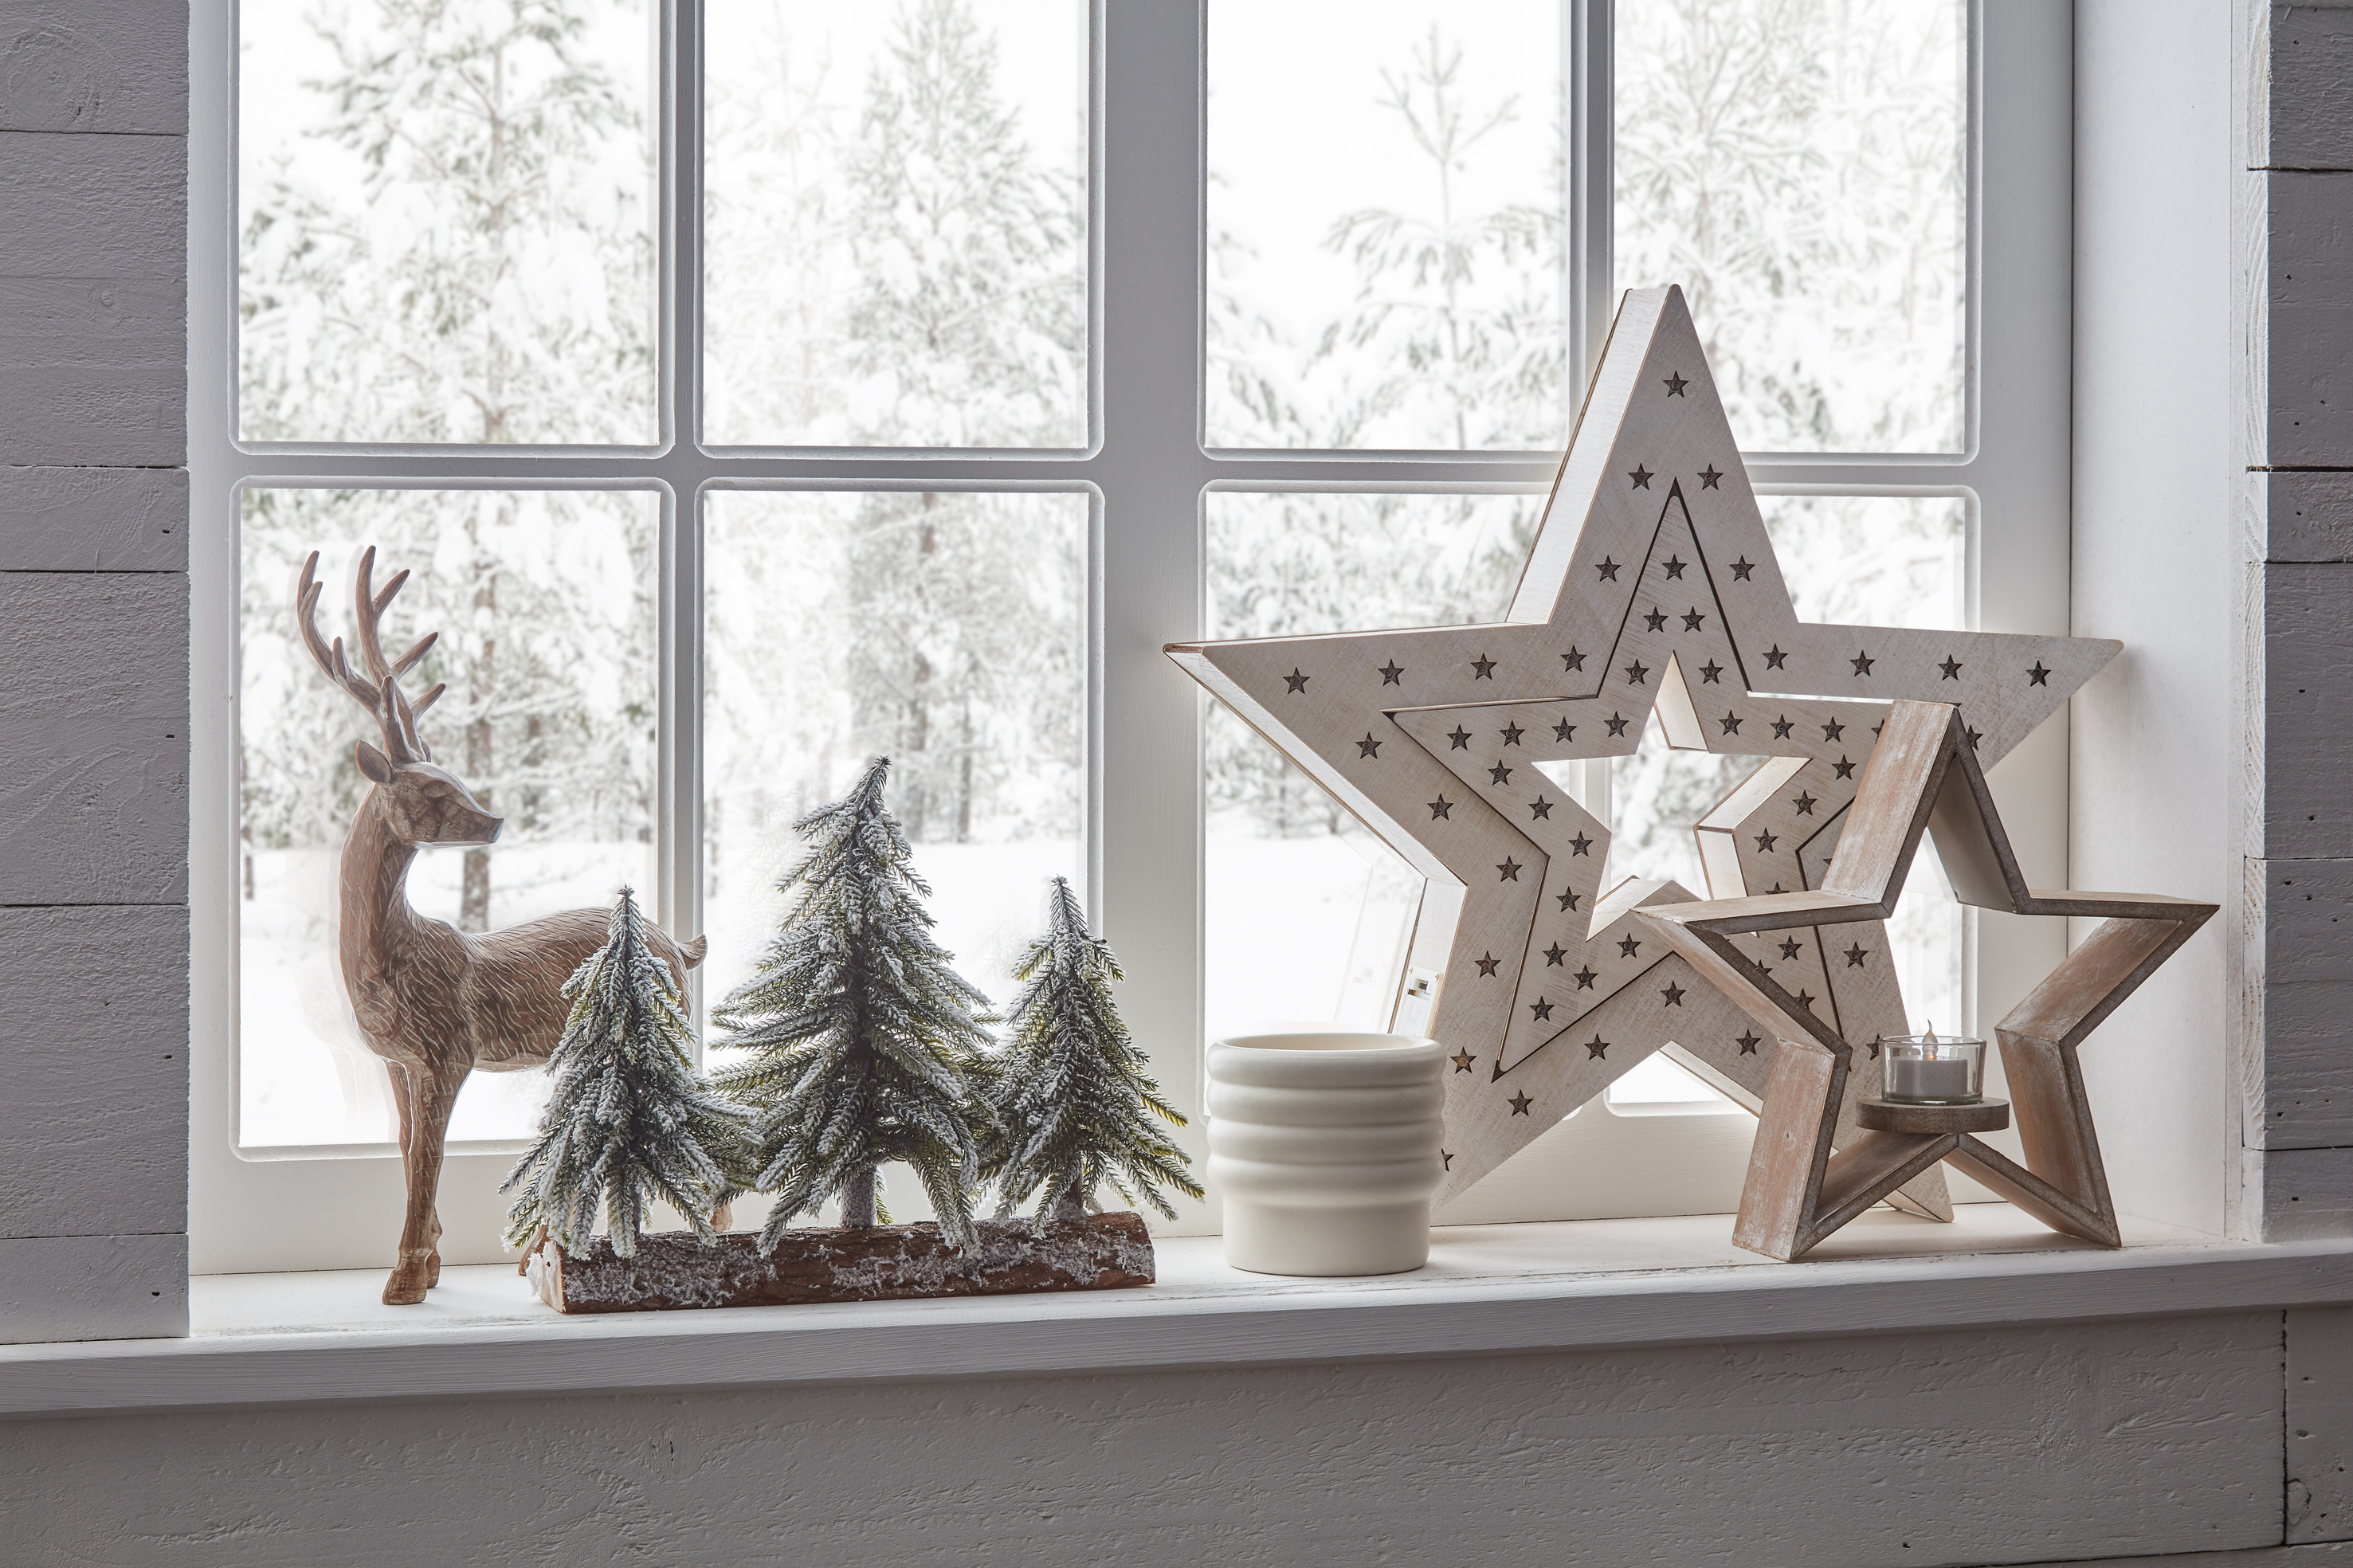 A windowsill with festive Christmas decorations